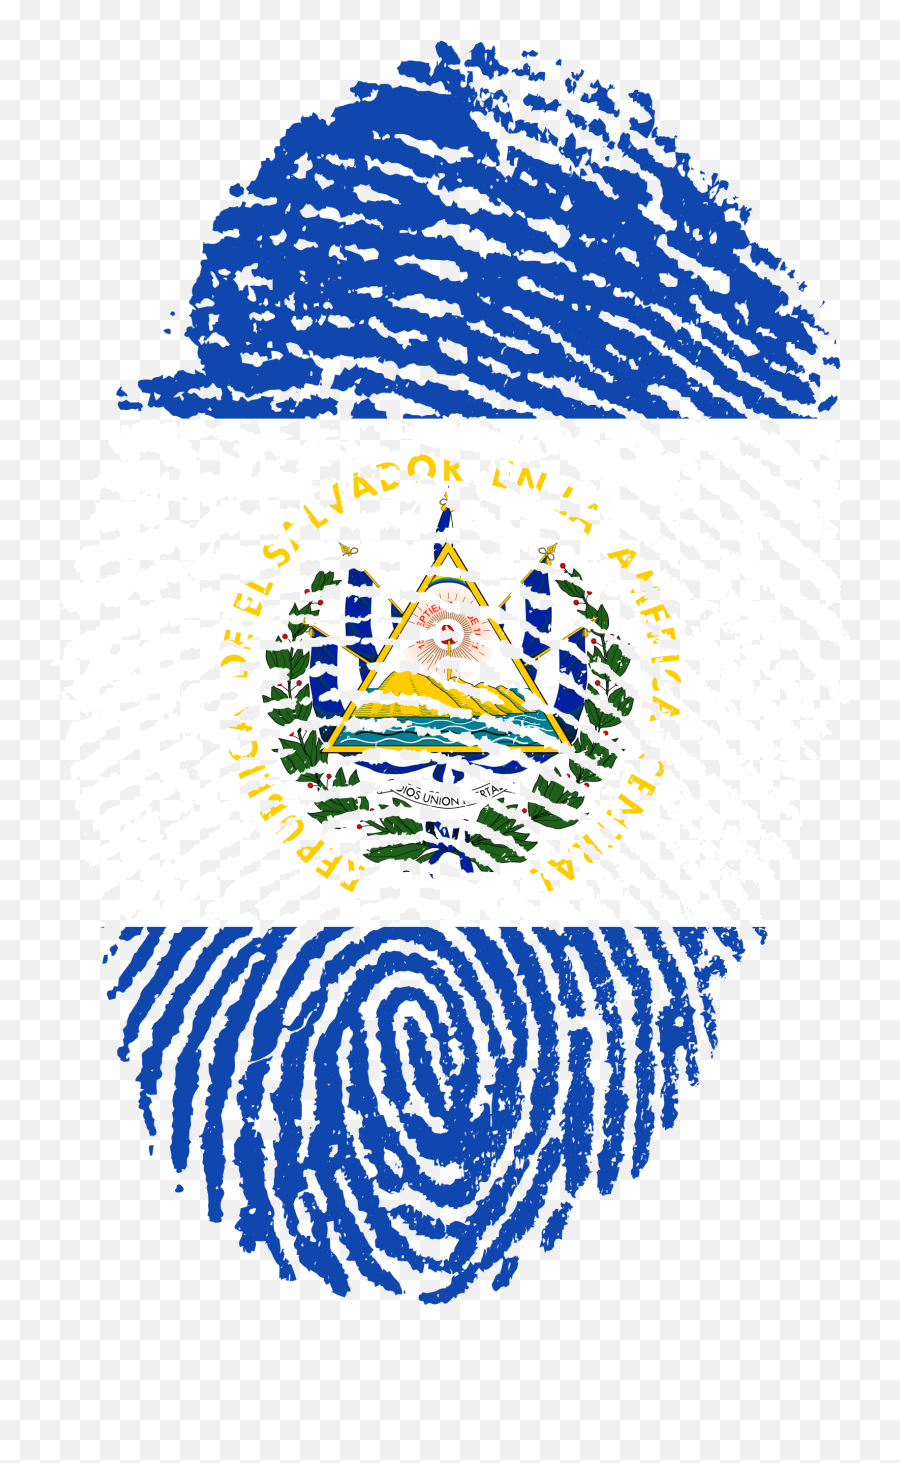 Download Imagenes De Escudo Mexico - Bandera De El Challenges Of Digital India Png,Bandera De Mexico Png